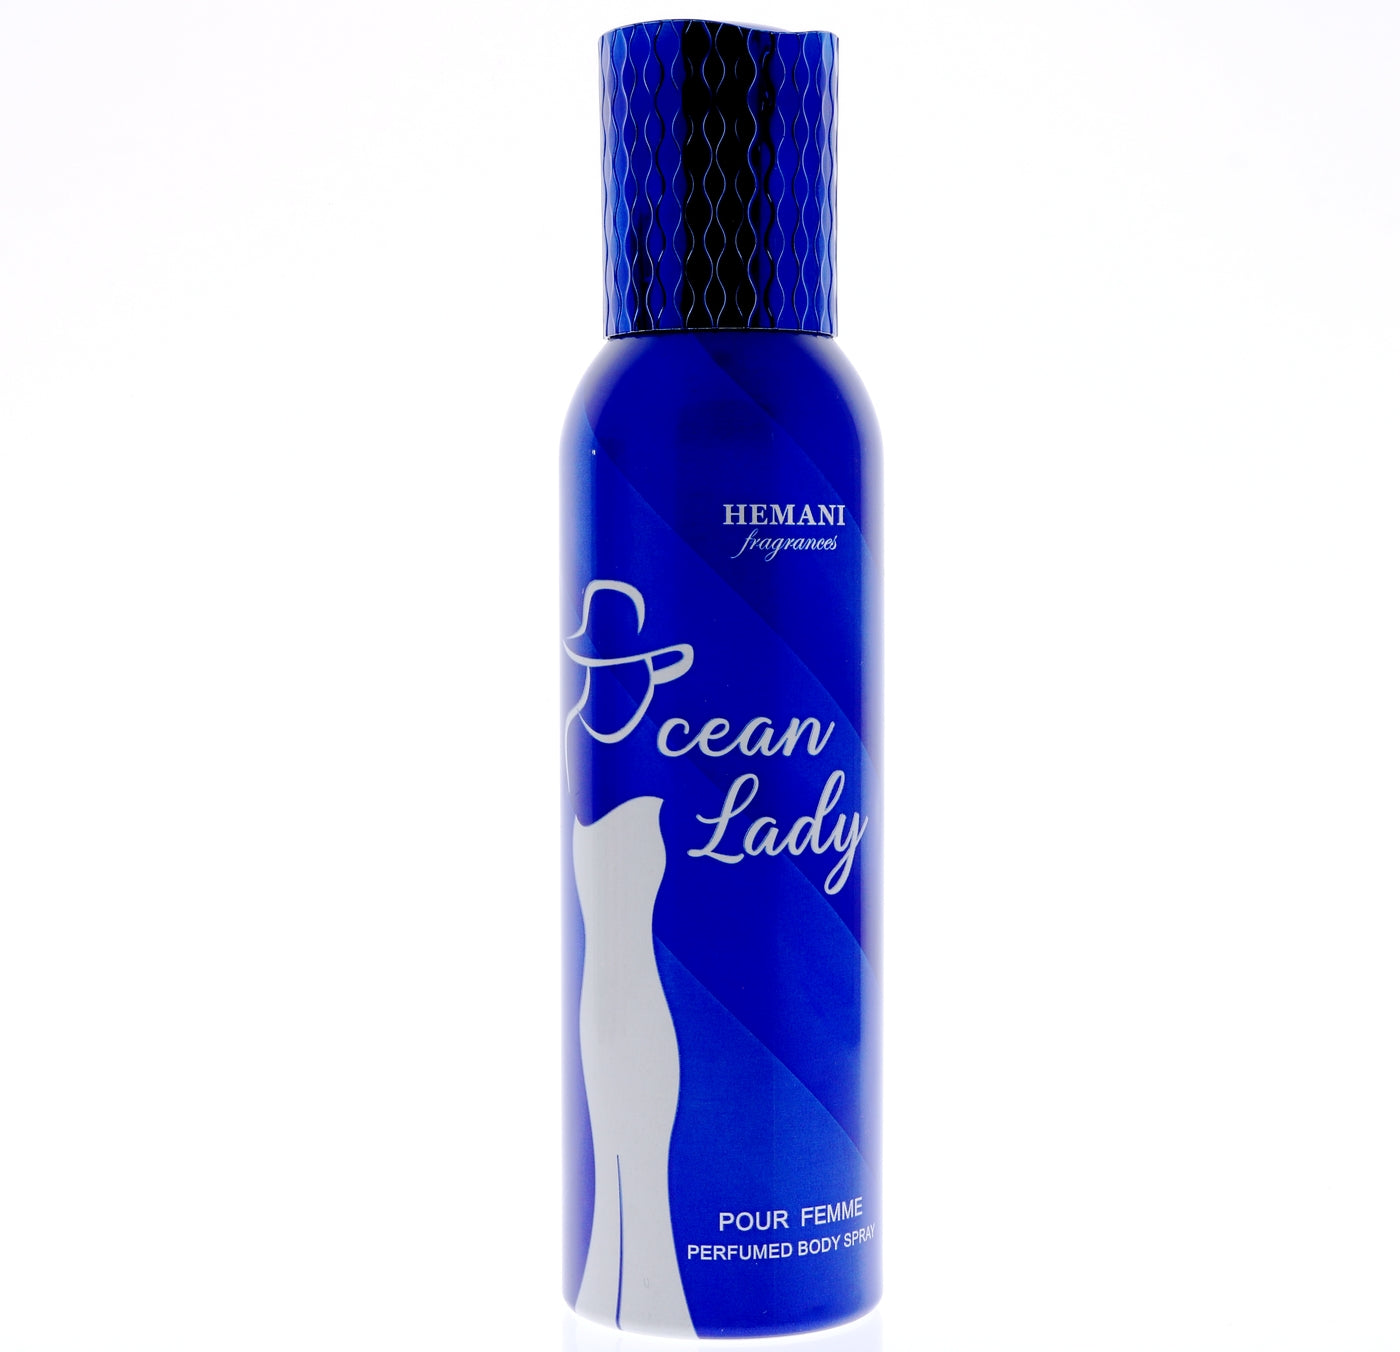 hemani-ocean-lady-deodorant-spray-200ml-7-oz-for-women-1